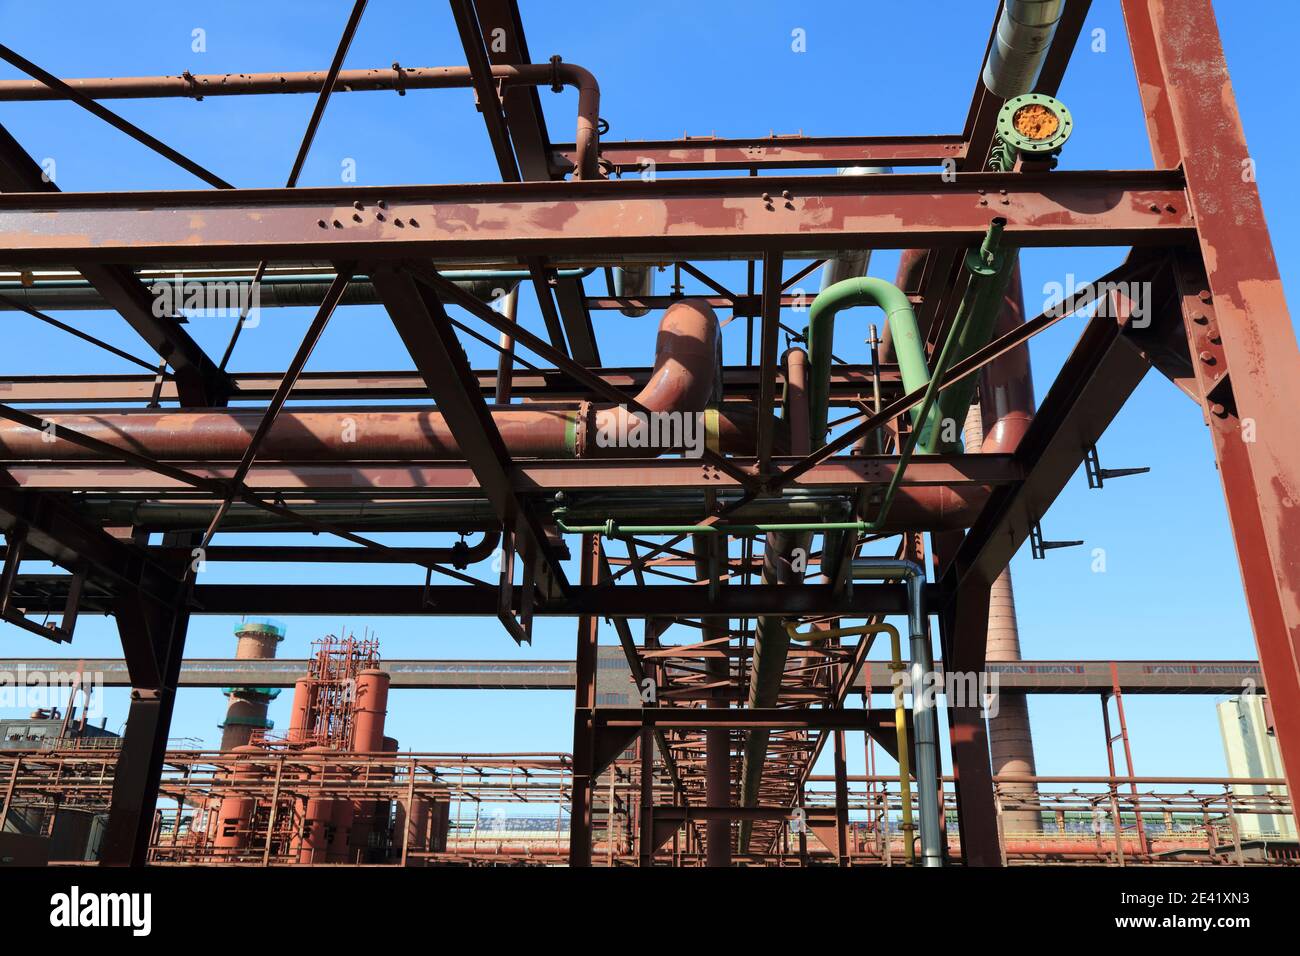 Essen, Germany. Industrial heritage of Ruhr region. Zollverein, a UNESCO World Heritage Site. Stock Photo